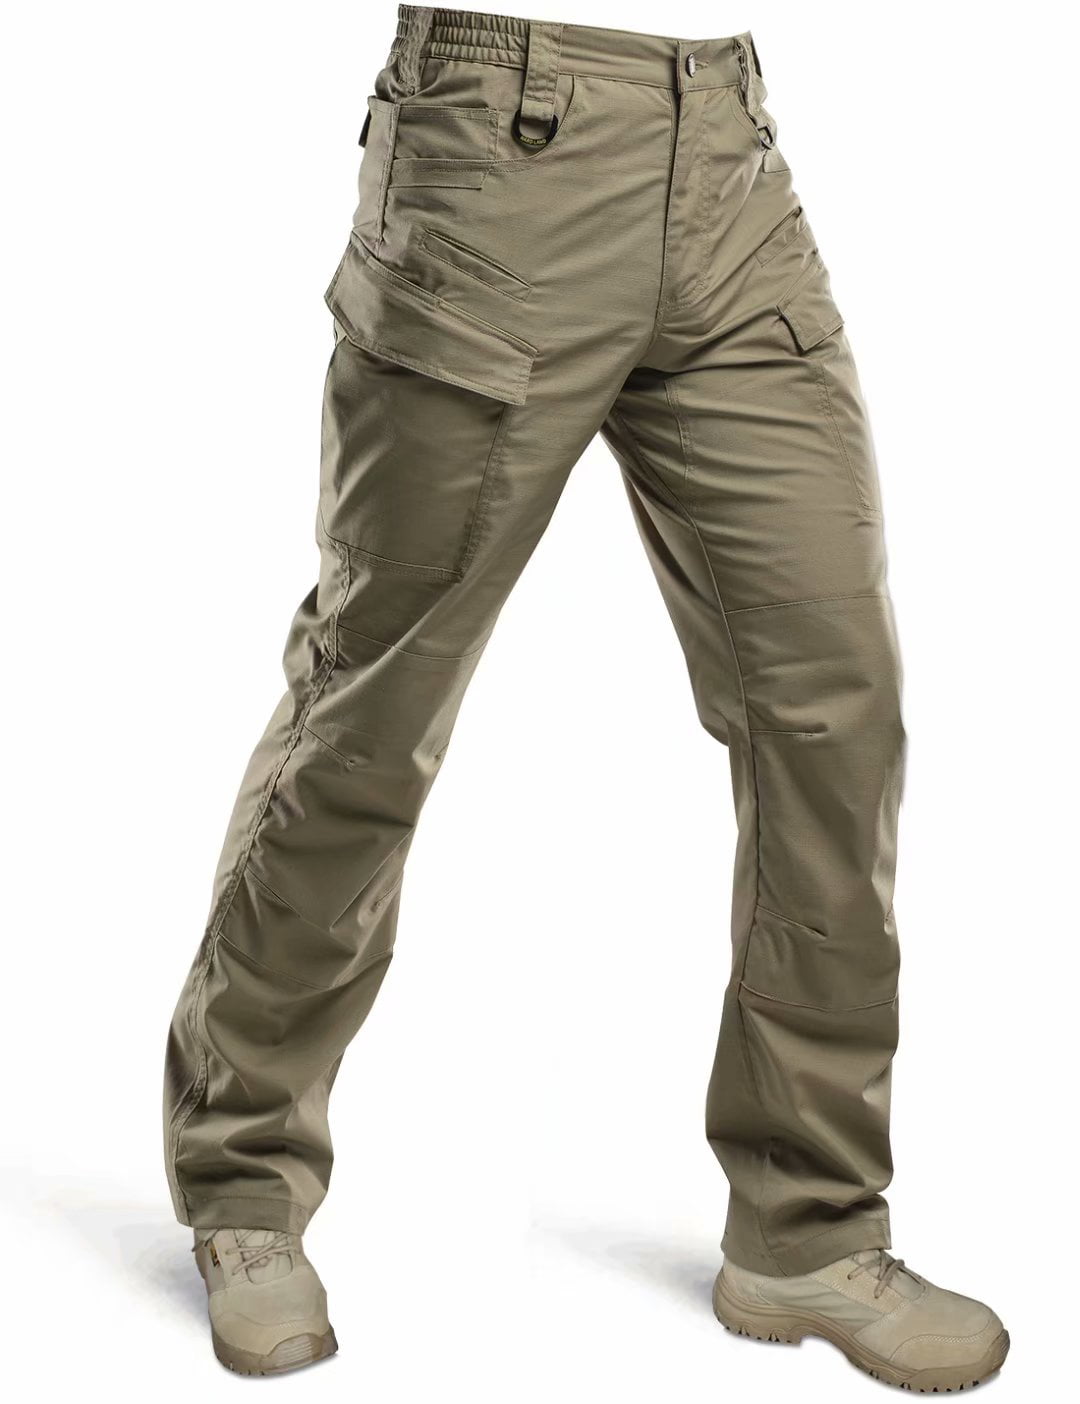 HARD LAND Mens Tactical Pants Ripstop,14 Pockets,Waterproof Gusseted Work Cargo Pants 